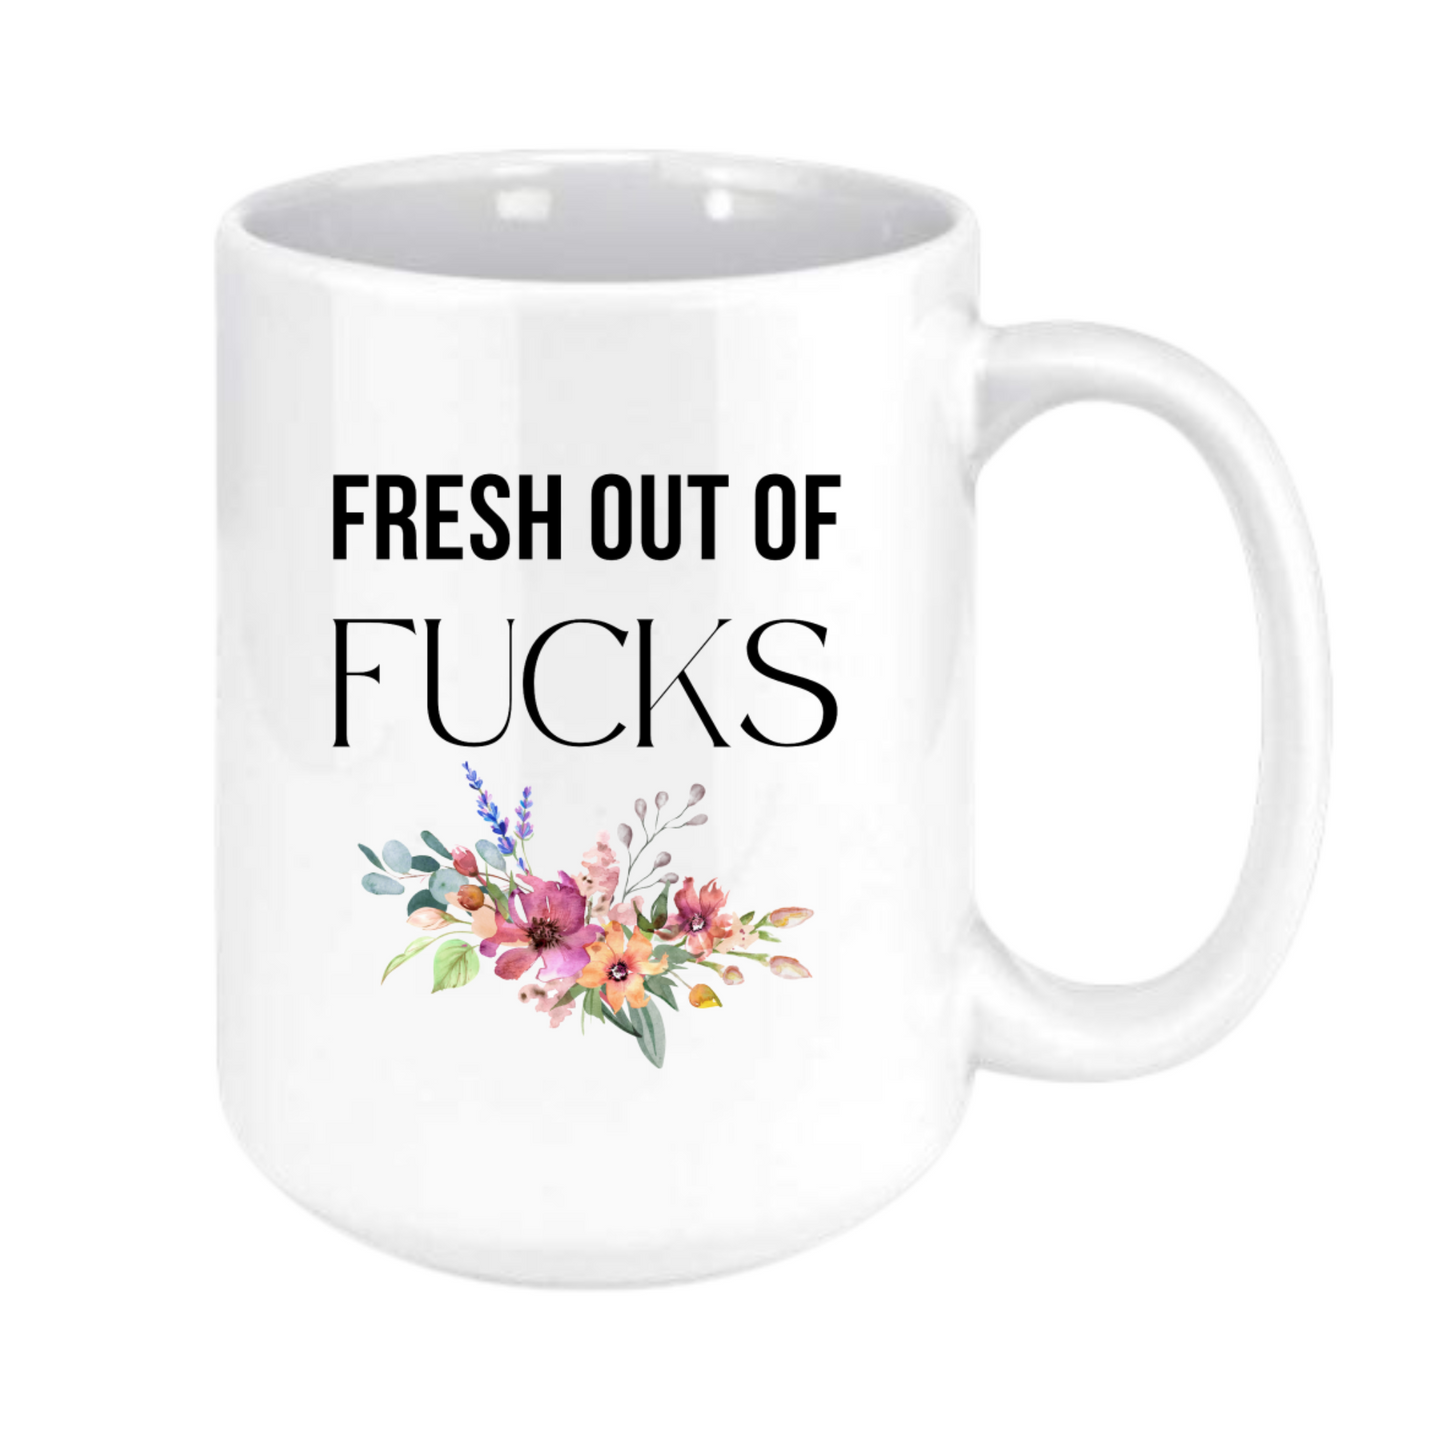 Fresh out of f*$ks mug